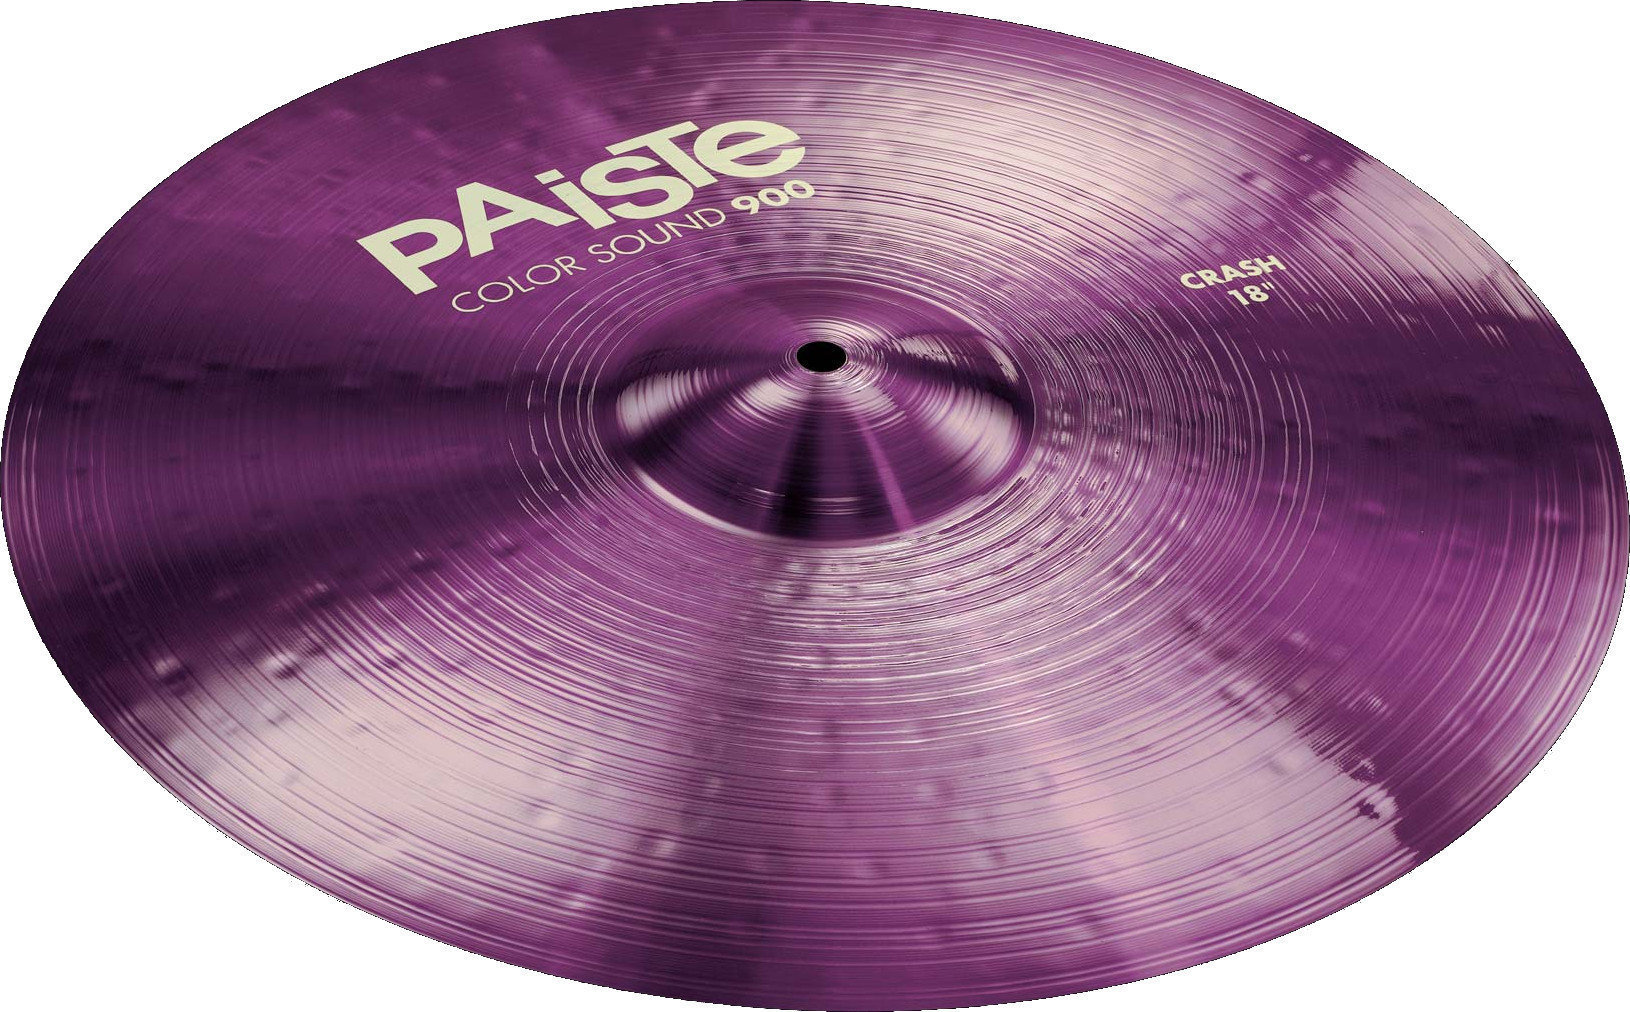 Crash Cymbal Paiste Color Sound 900 Crash Cymbal 18" Violett